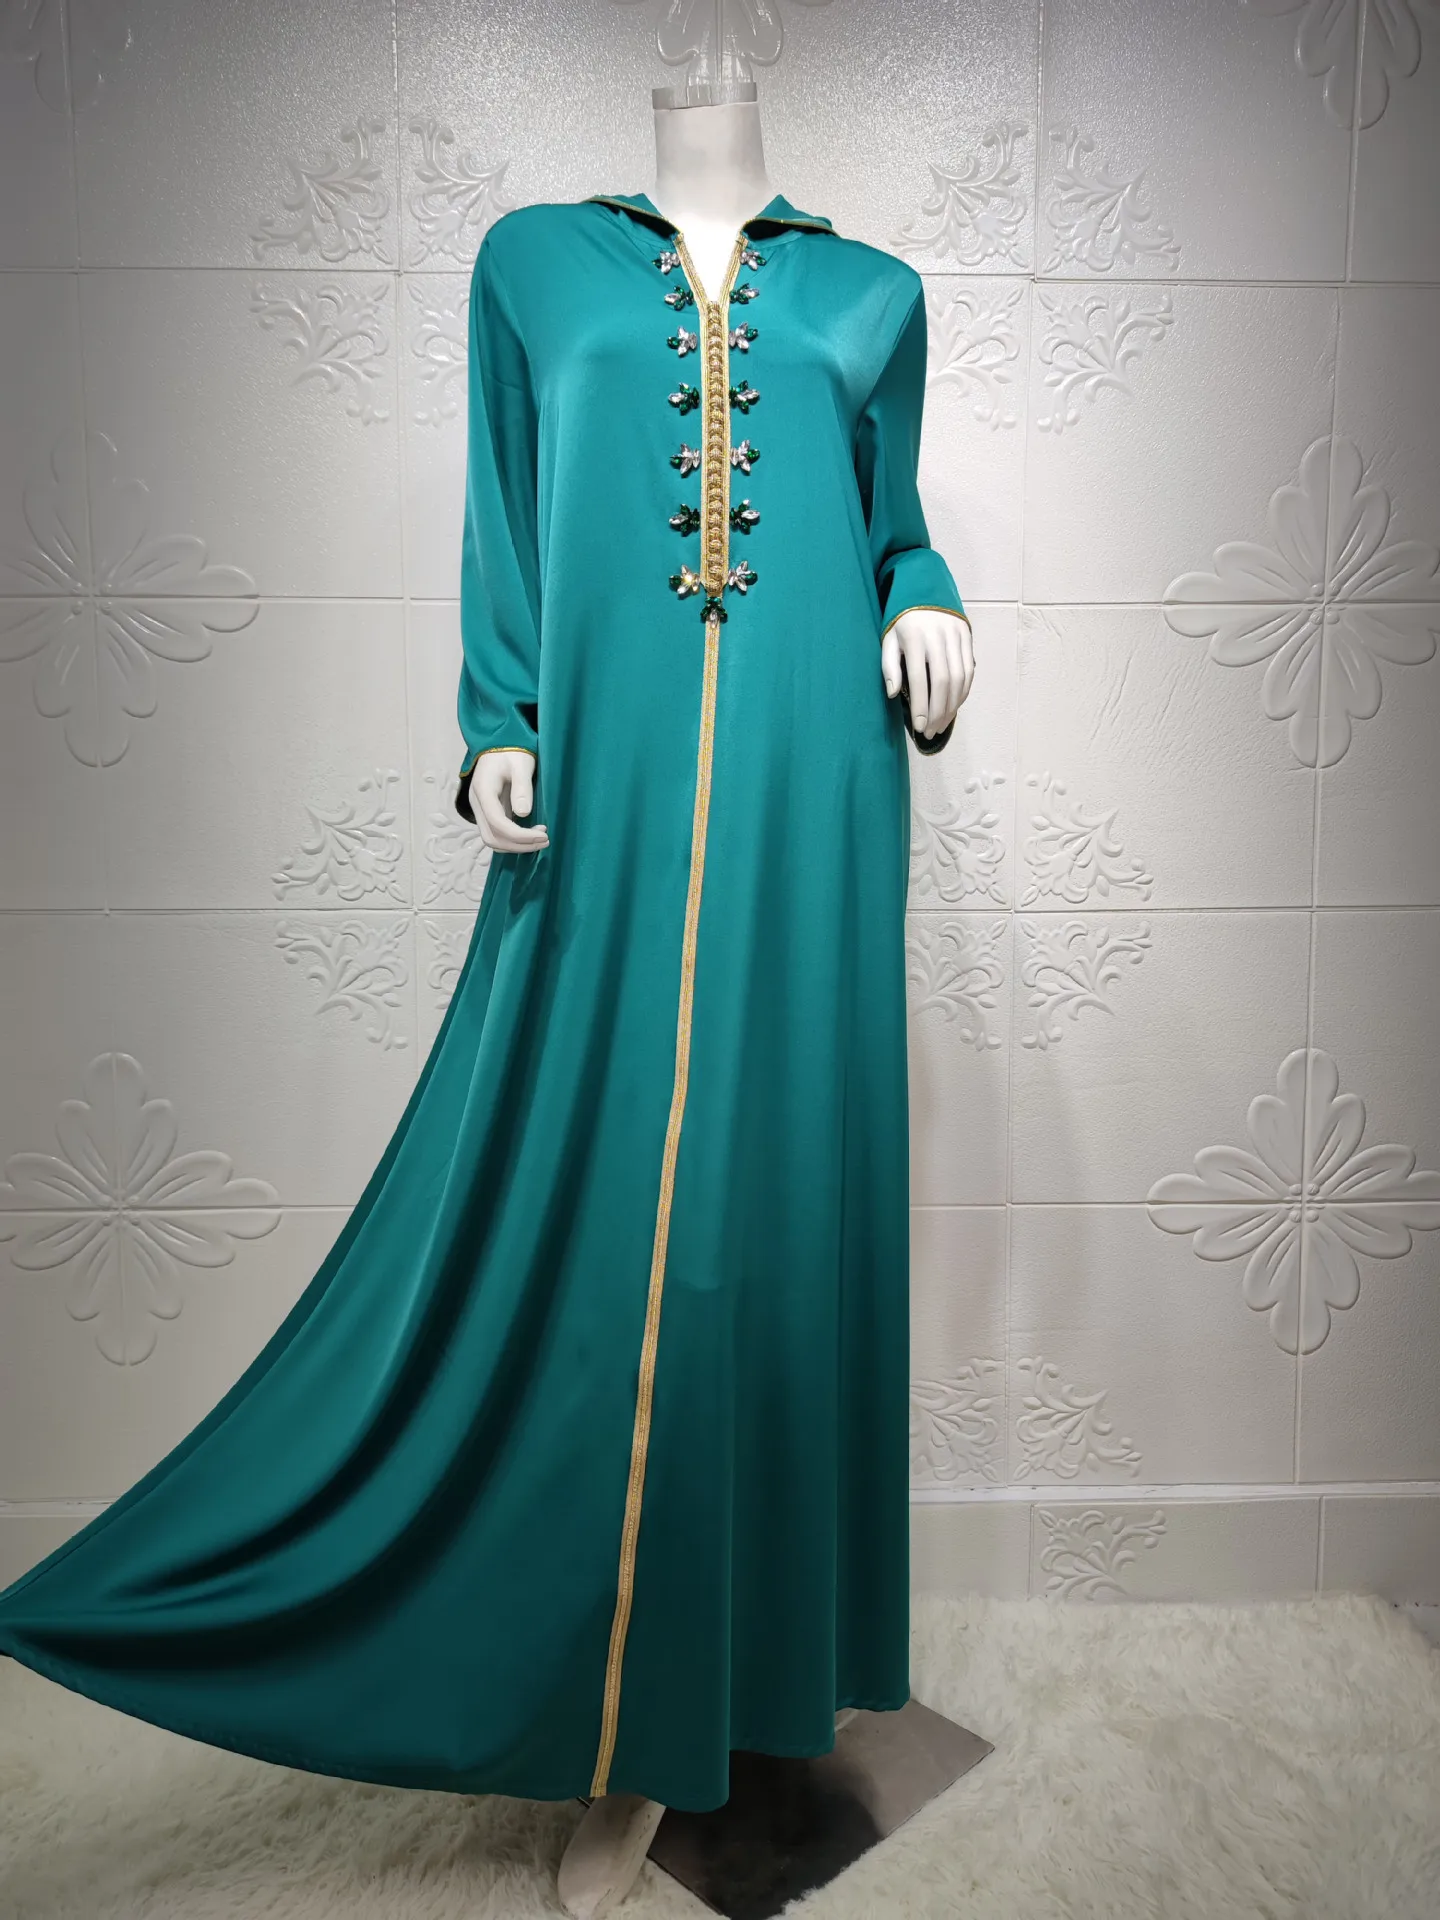 Bushra Abaya Dubai Islamic Clothing Turkey Muslim Hooded Dress Women Moroccan Caftan Elegant Lady Mubarak Djellaba Femme